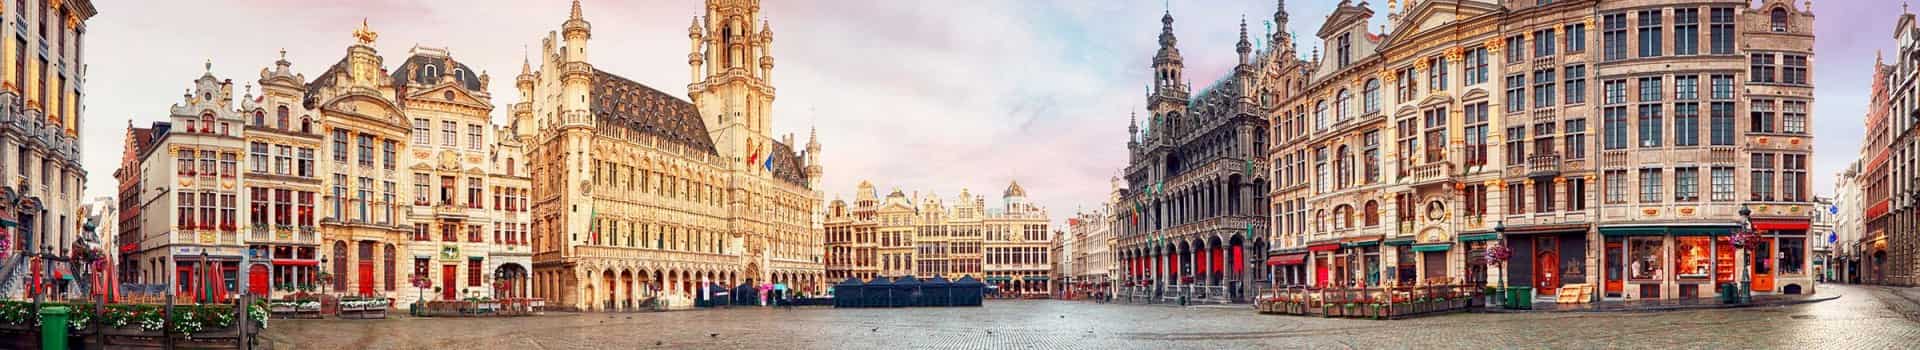 Hotels mit Halbpensionsangeboten in Belgien